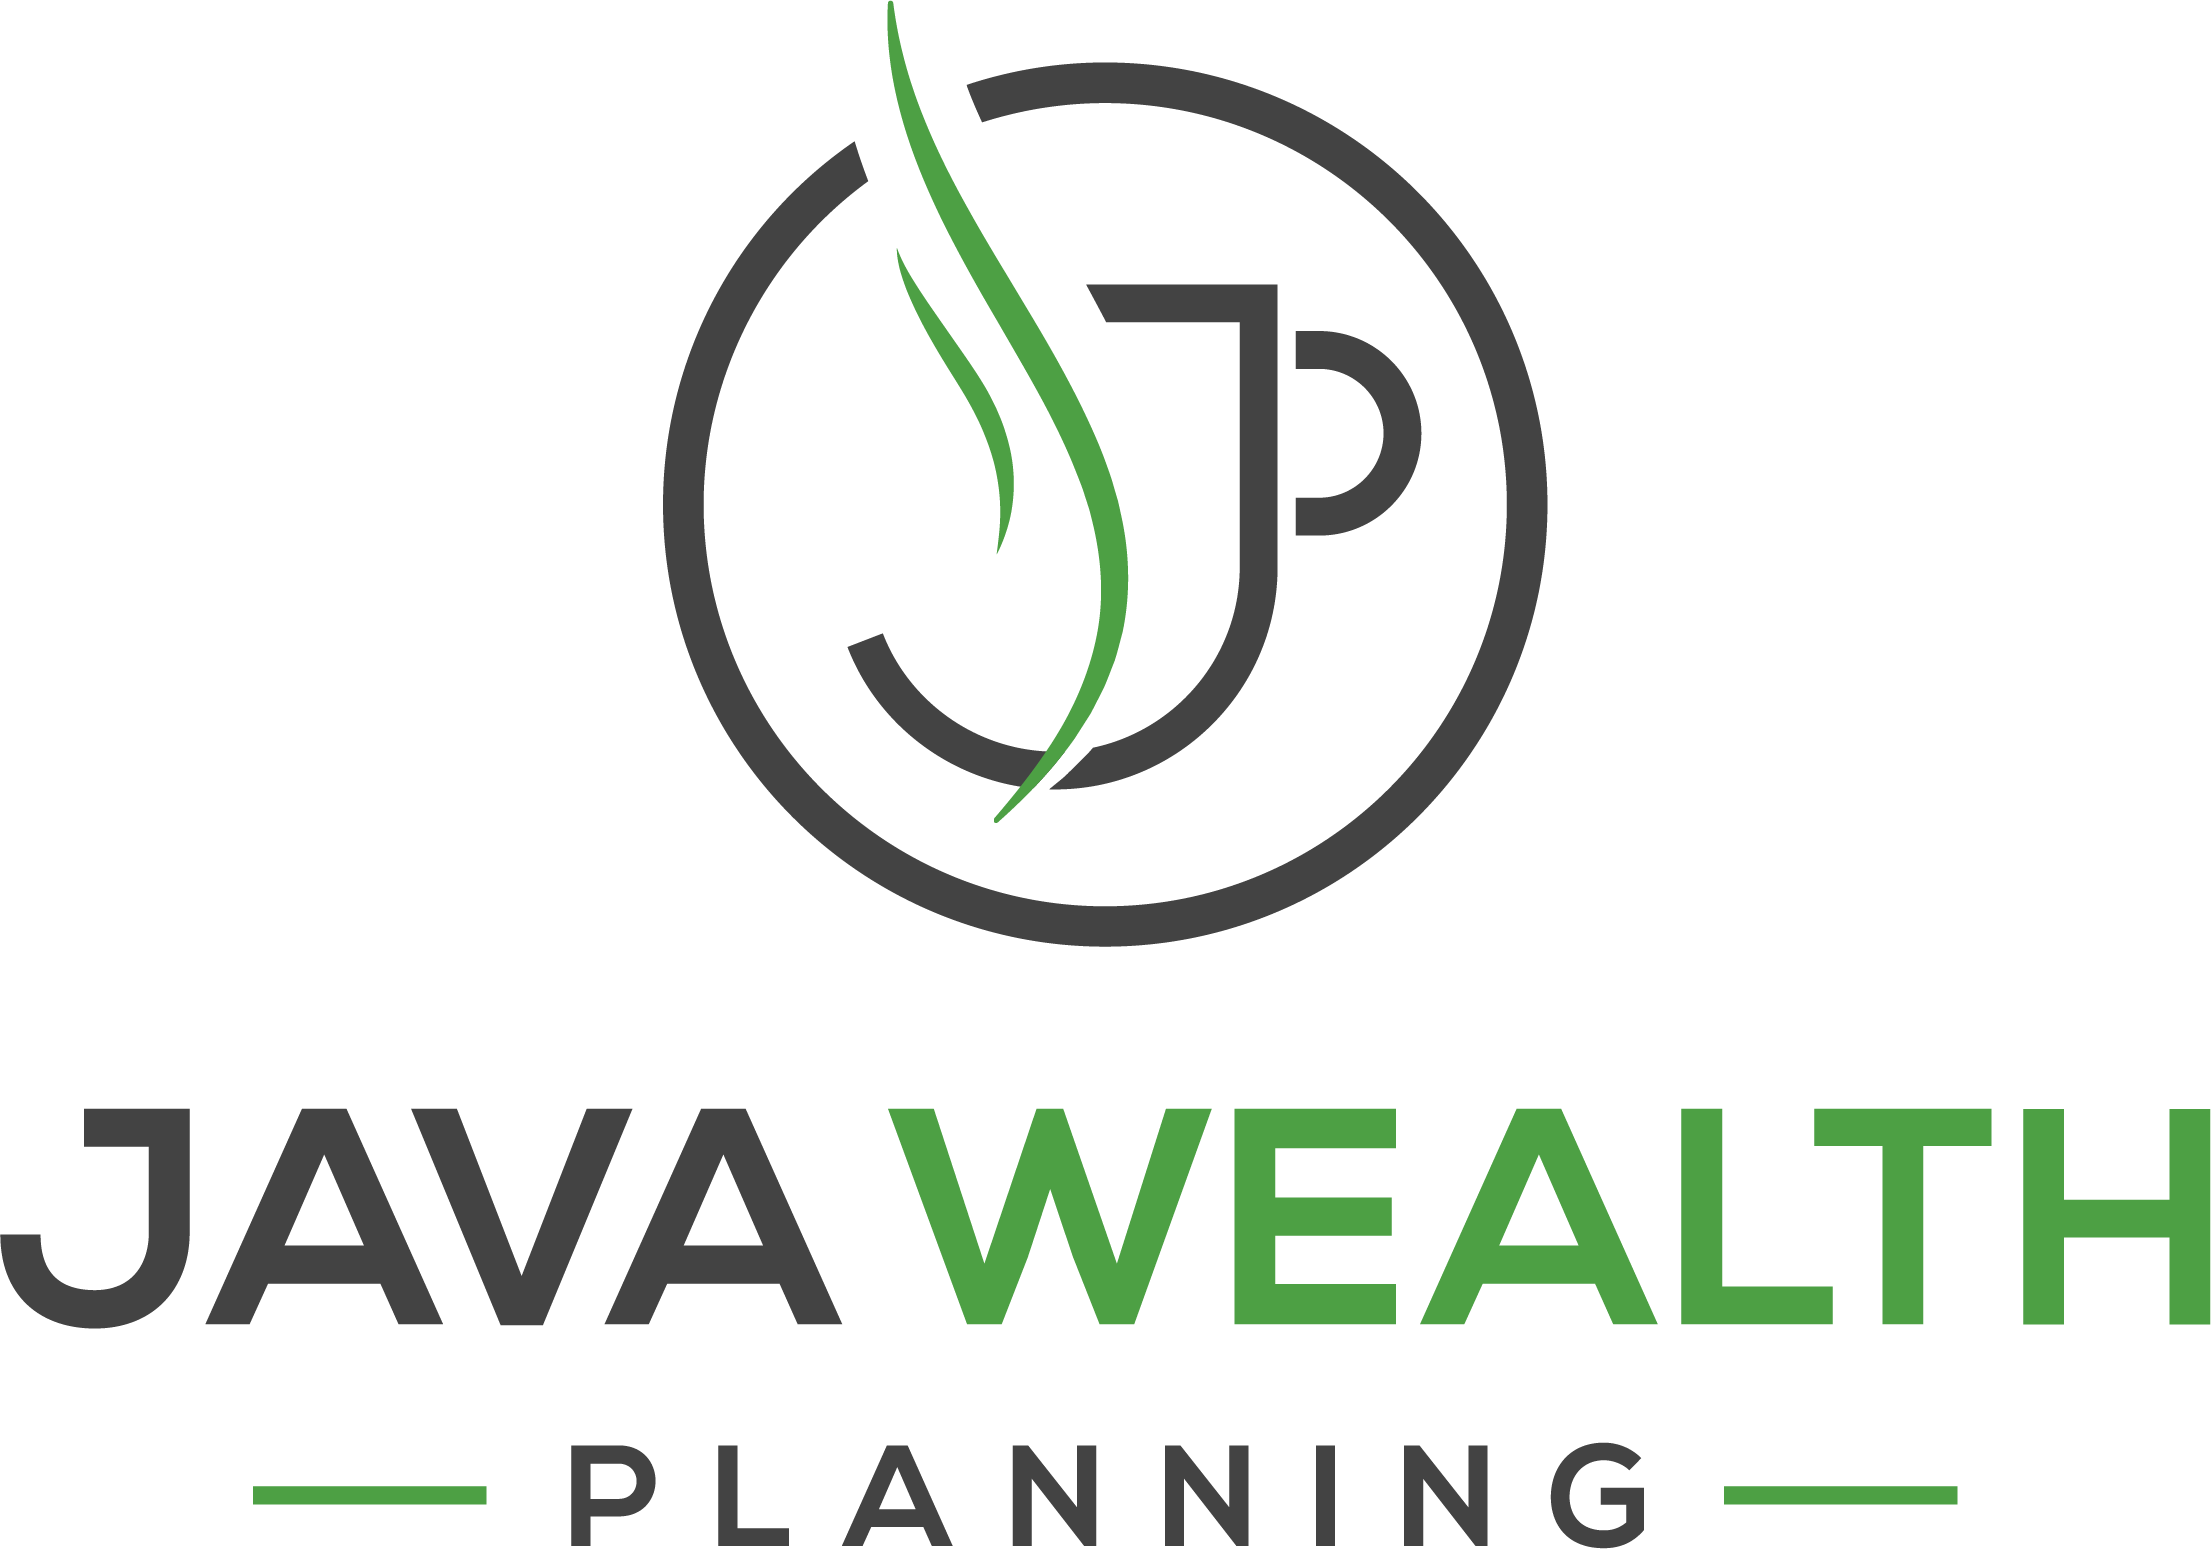 Java Wealth Planning